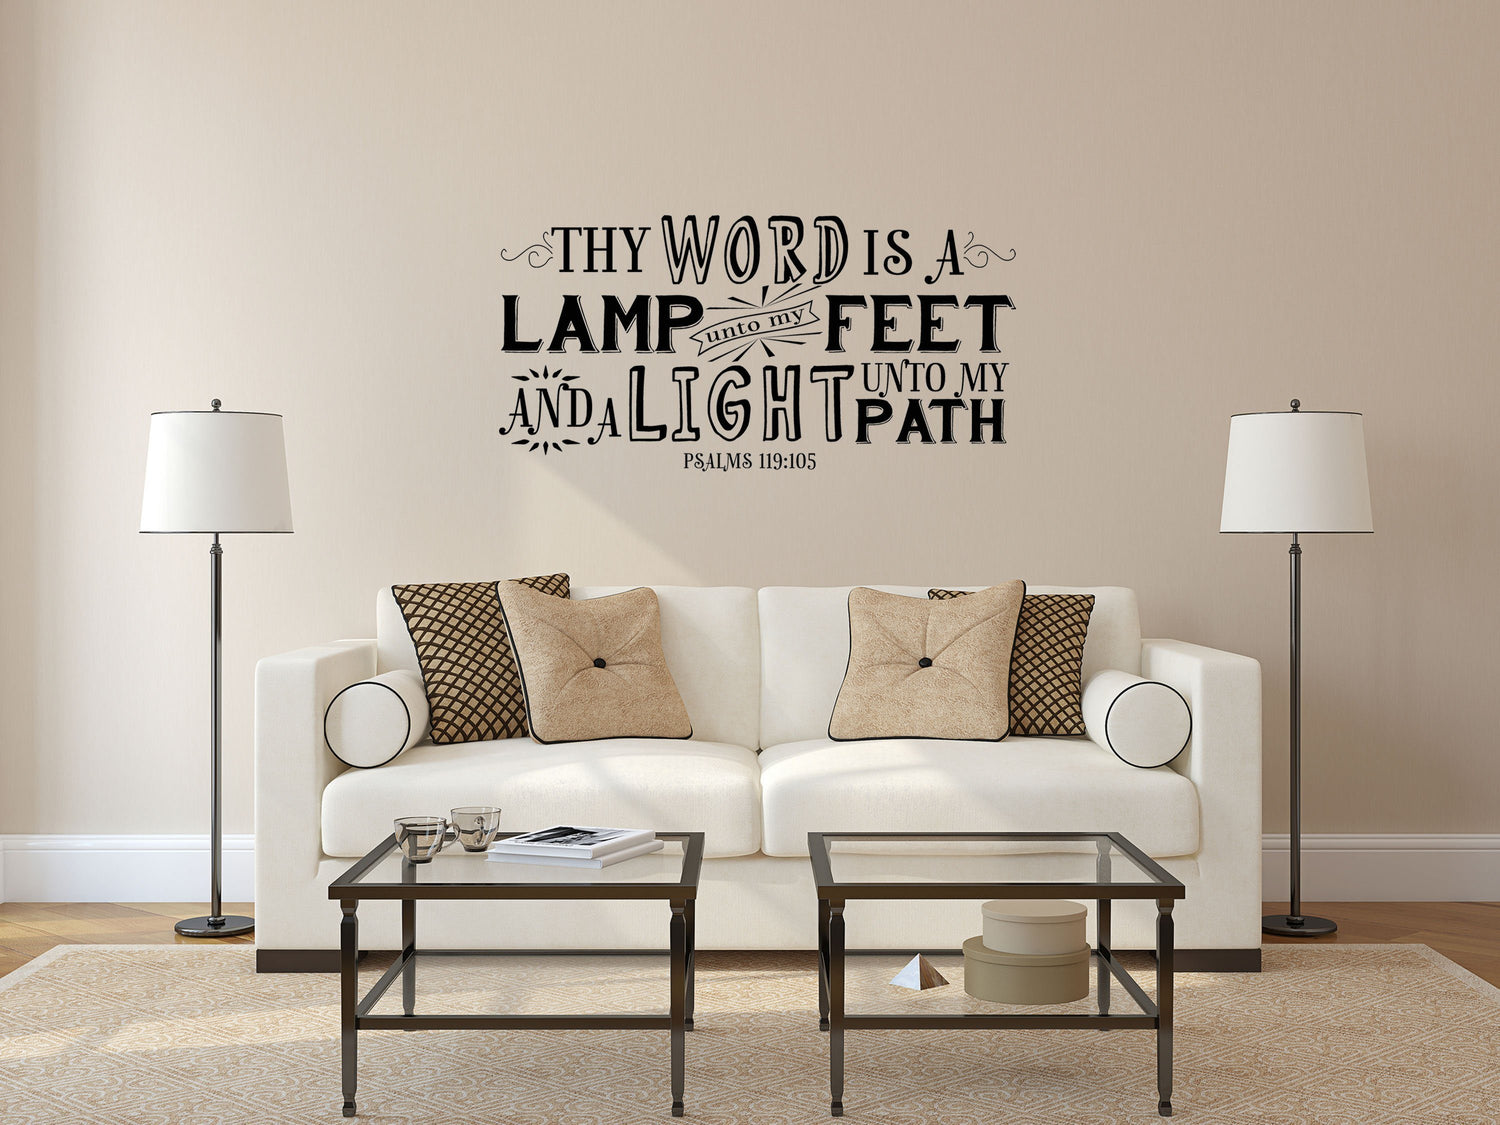 Psalm 119 - Church Scripture Words Wall Sticker Vinyl Wall Decal Inspirational Wall Signs 